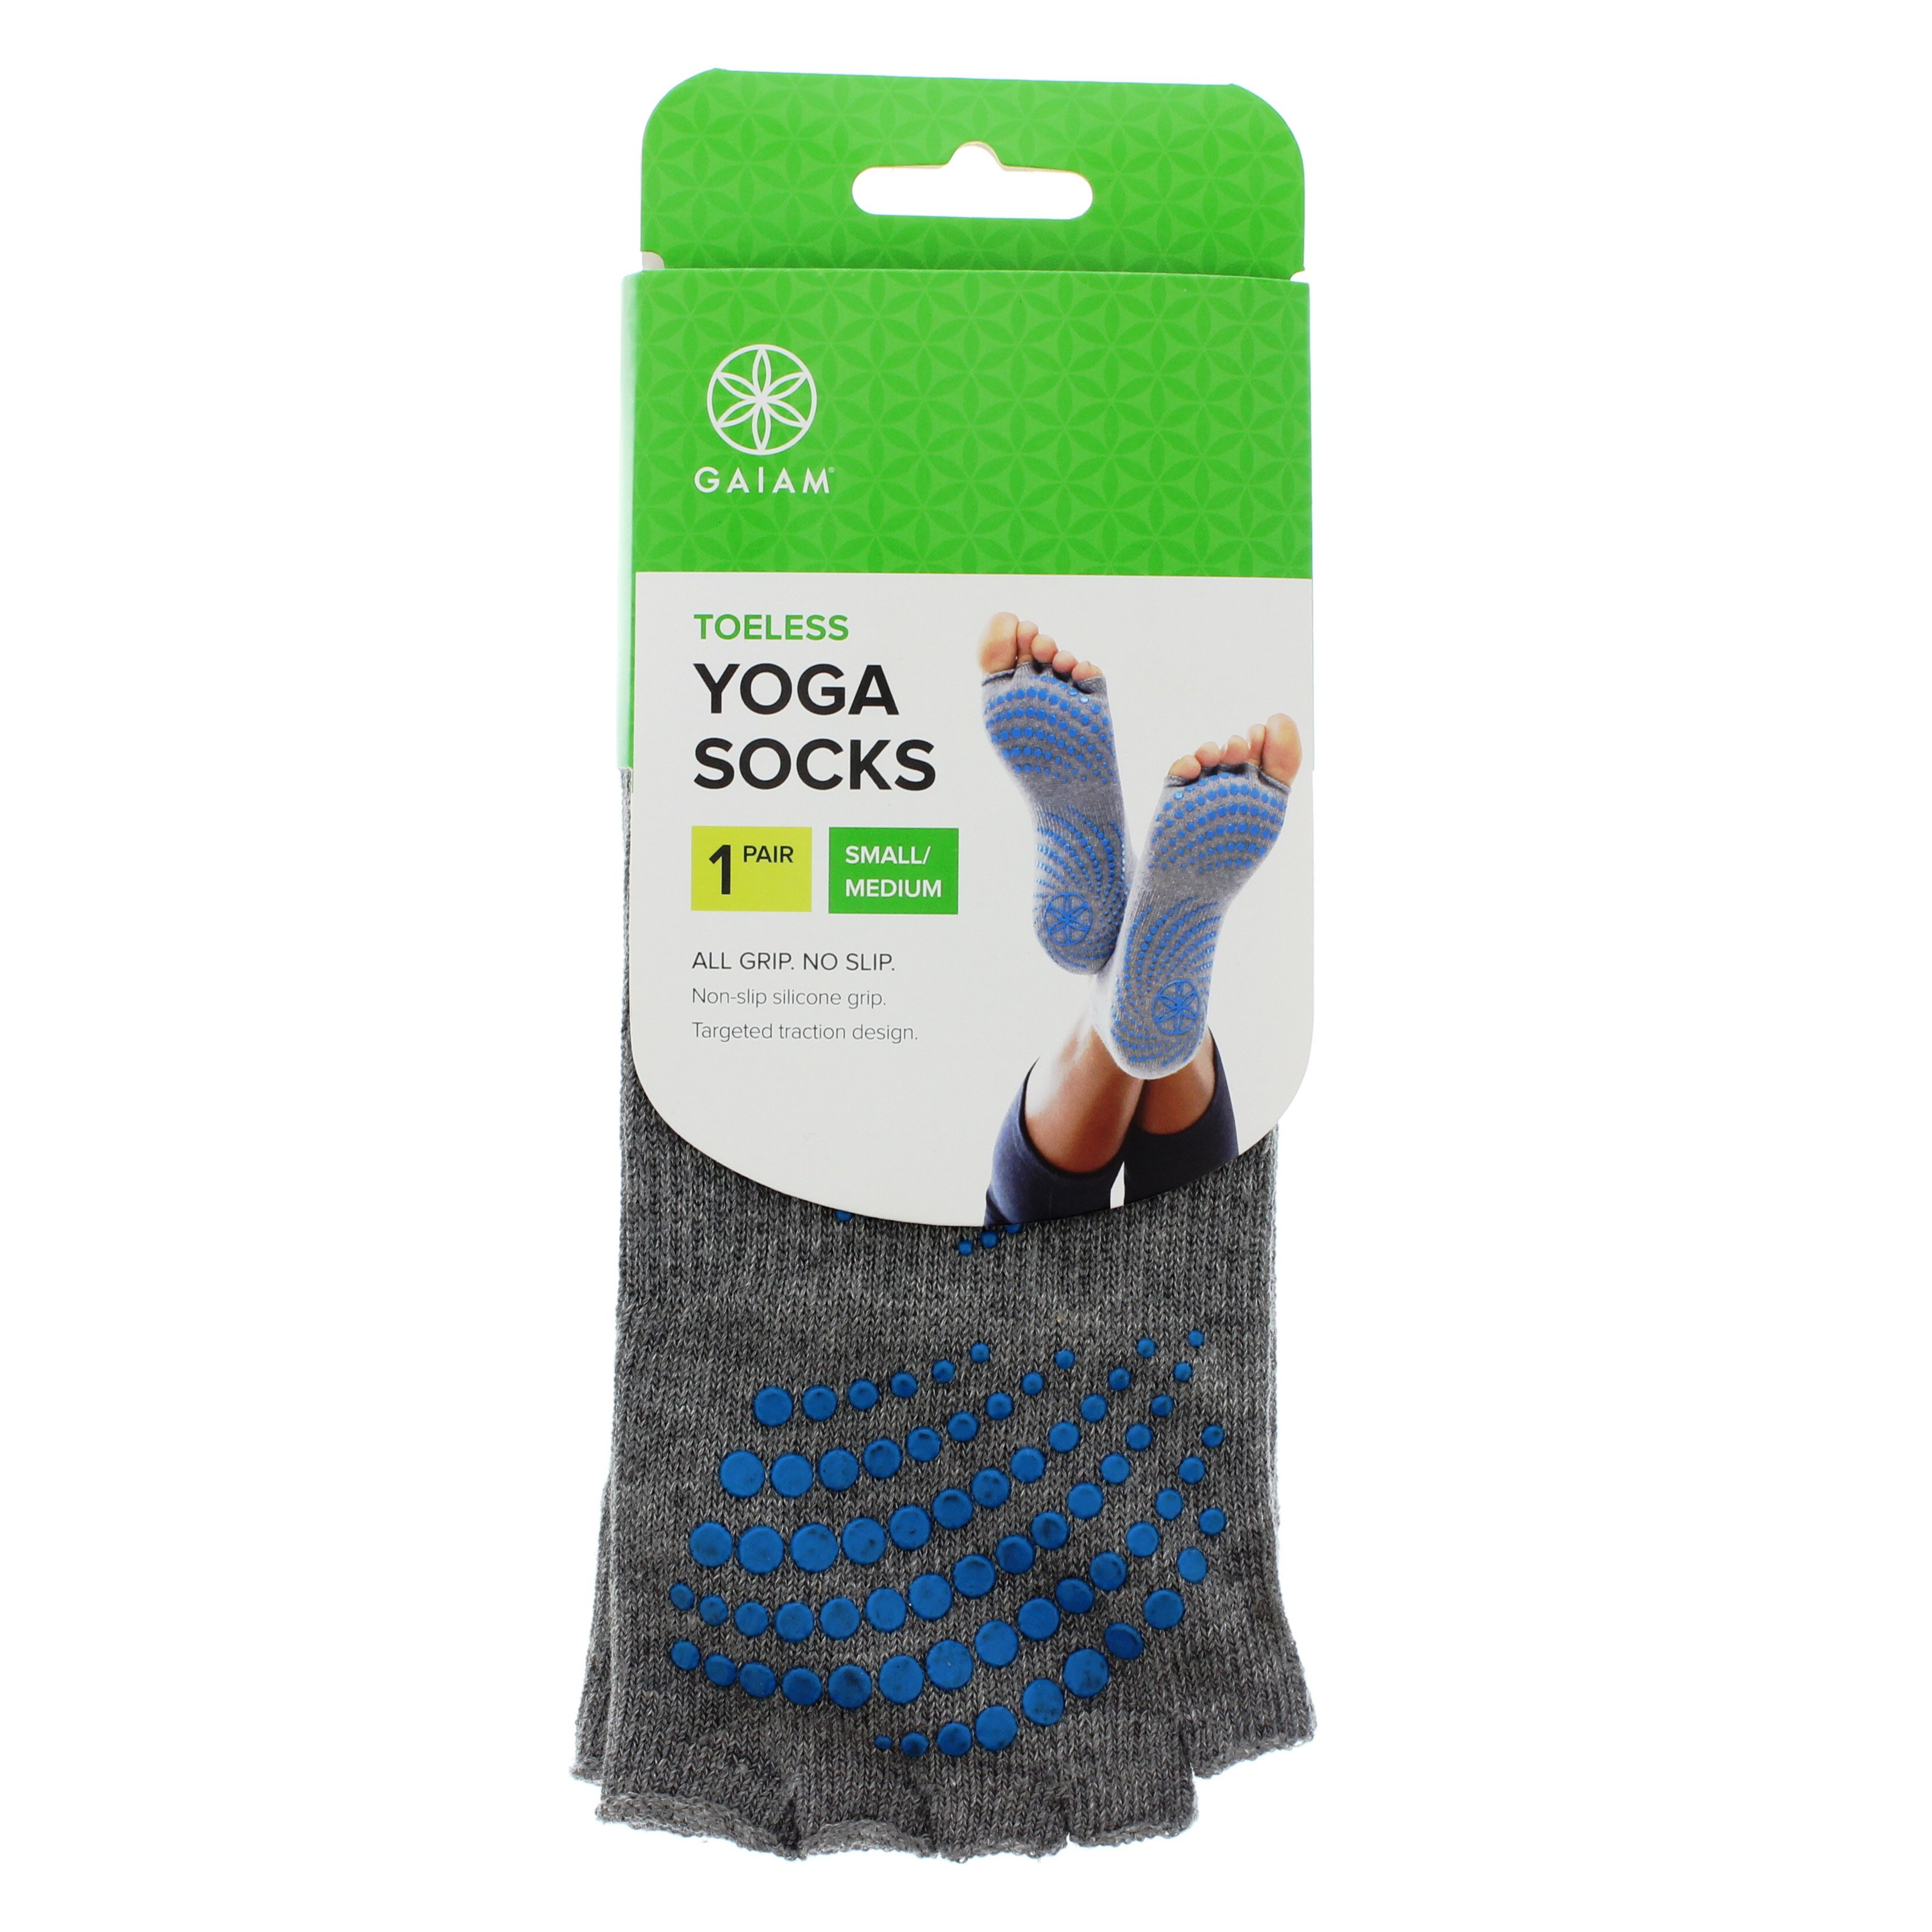 Gaiam Toeless Yoga Socks - Shop Socks & Hose at H-E-B